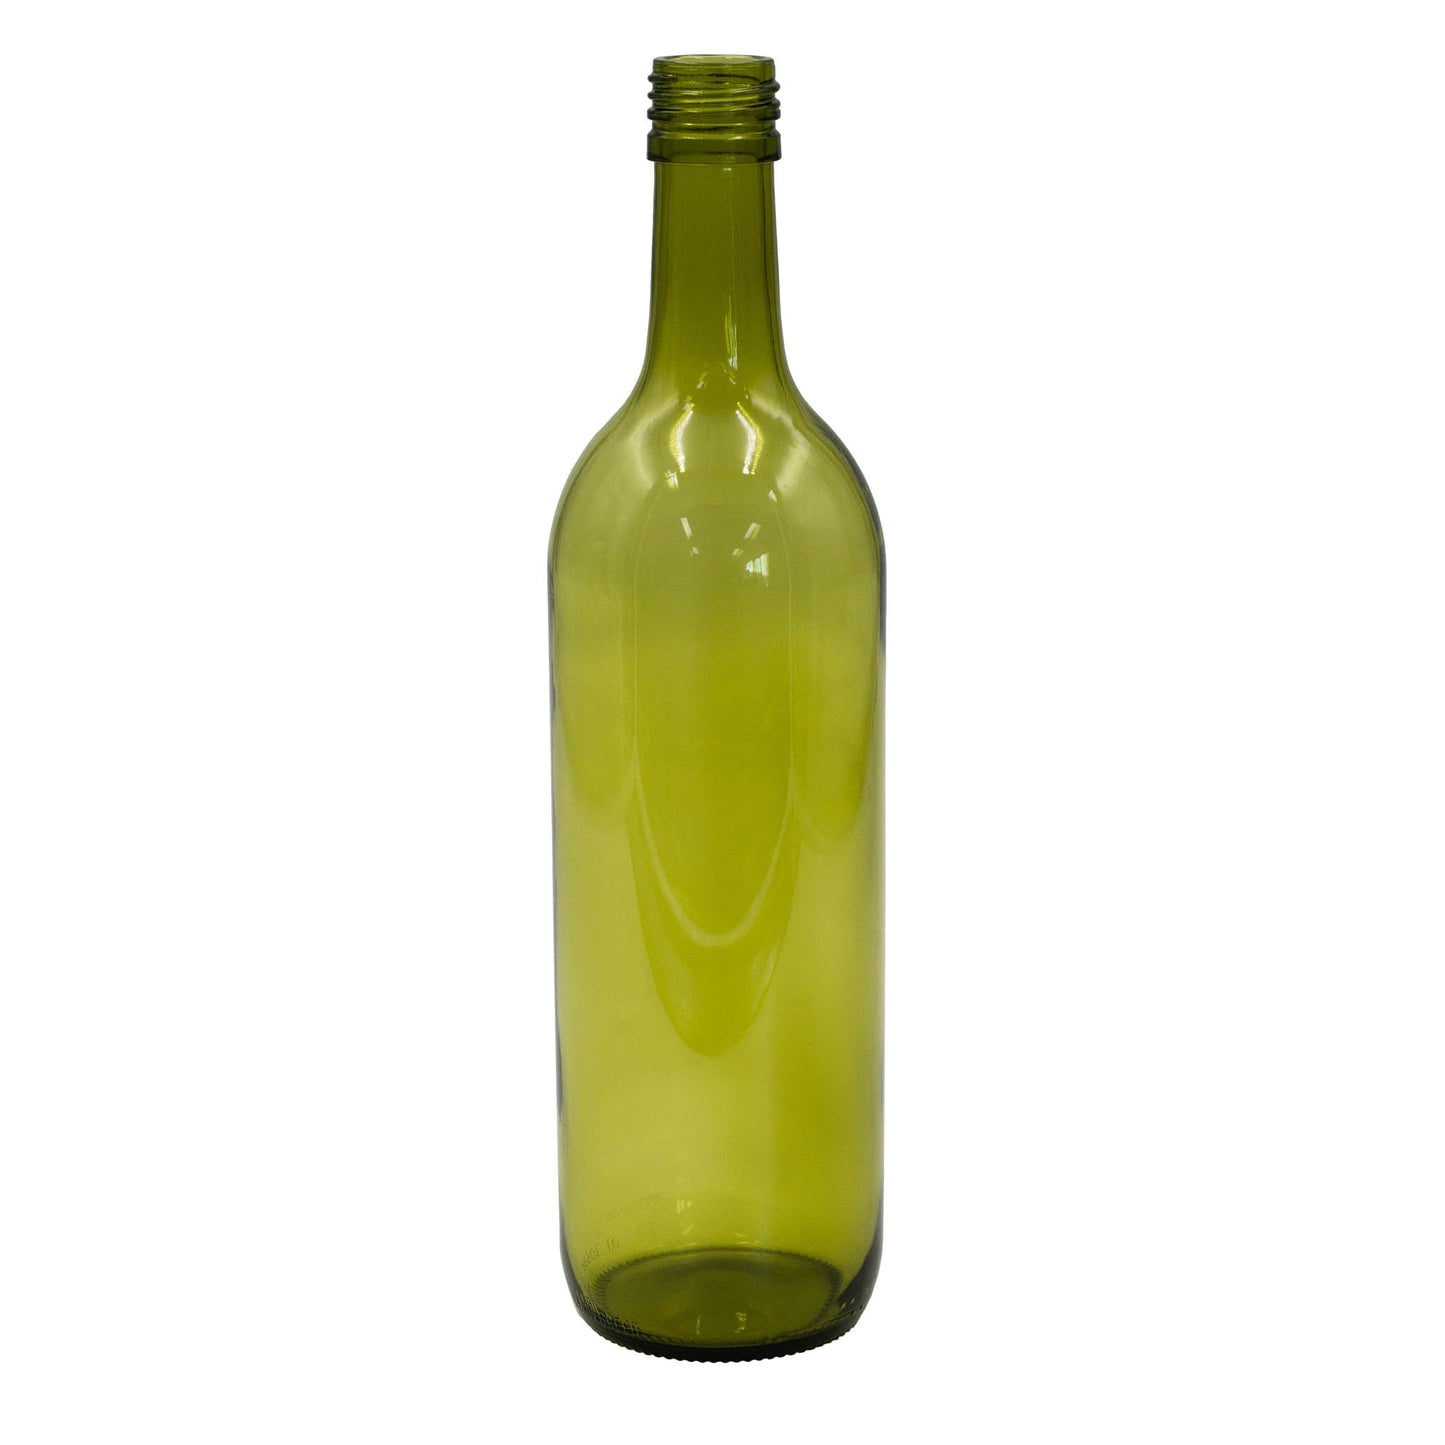 750ml green glass claret lightweight wine bottle with screw top opening. 